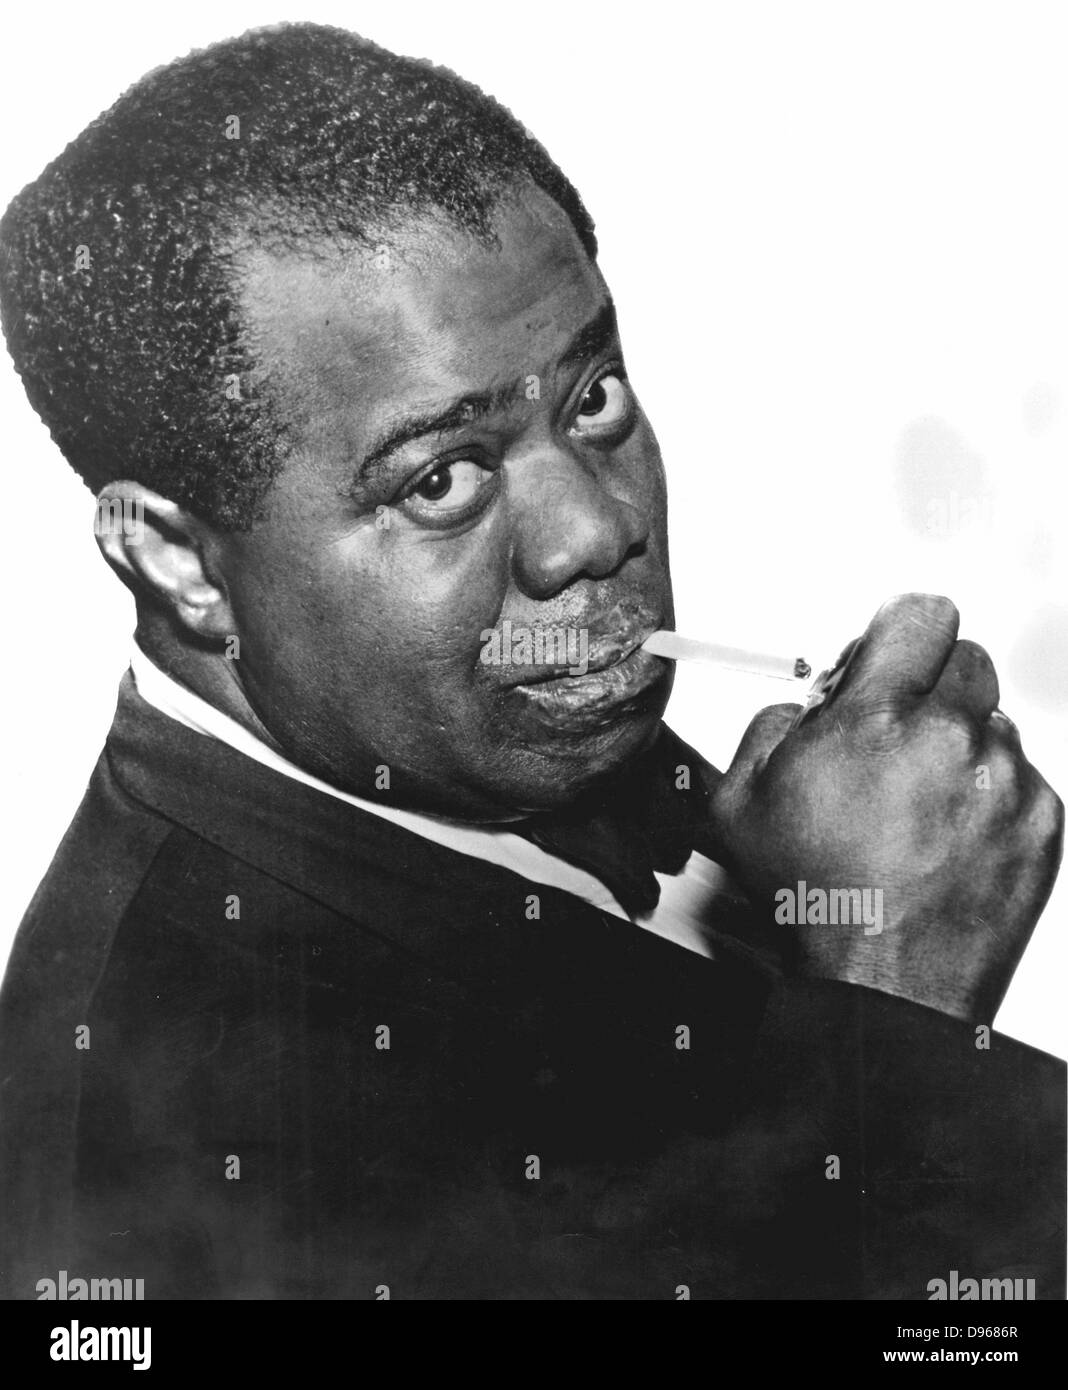 Louis (Satchmo) Armstrong (c1898-1971) American trombettista jazz e cantante. Fotografia Foto Stock